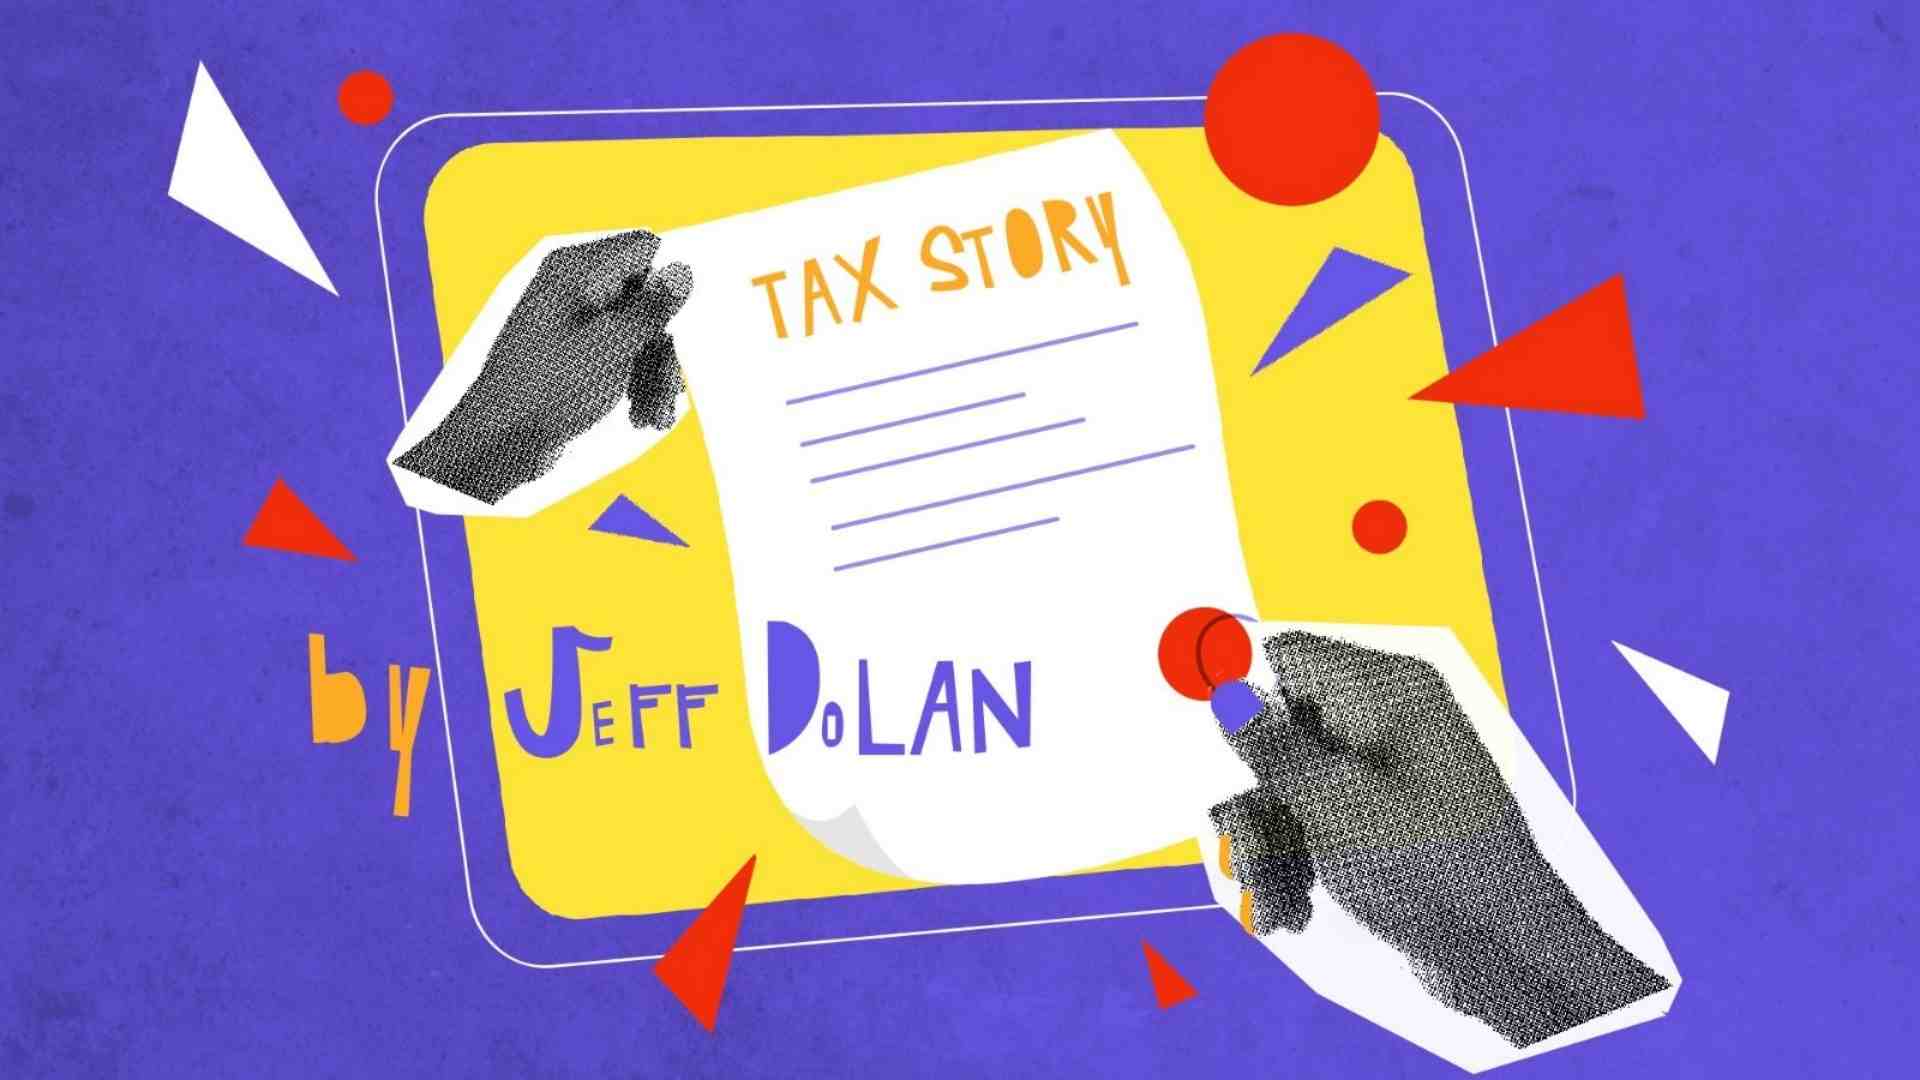 Tax story by Jeff Dolan